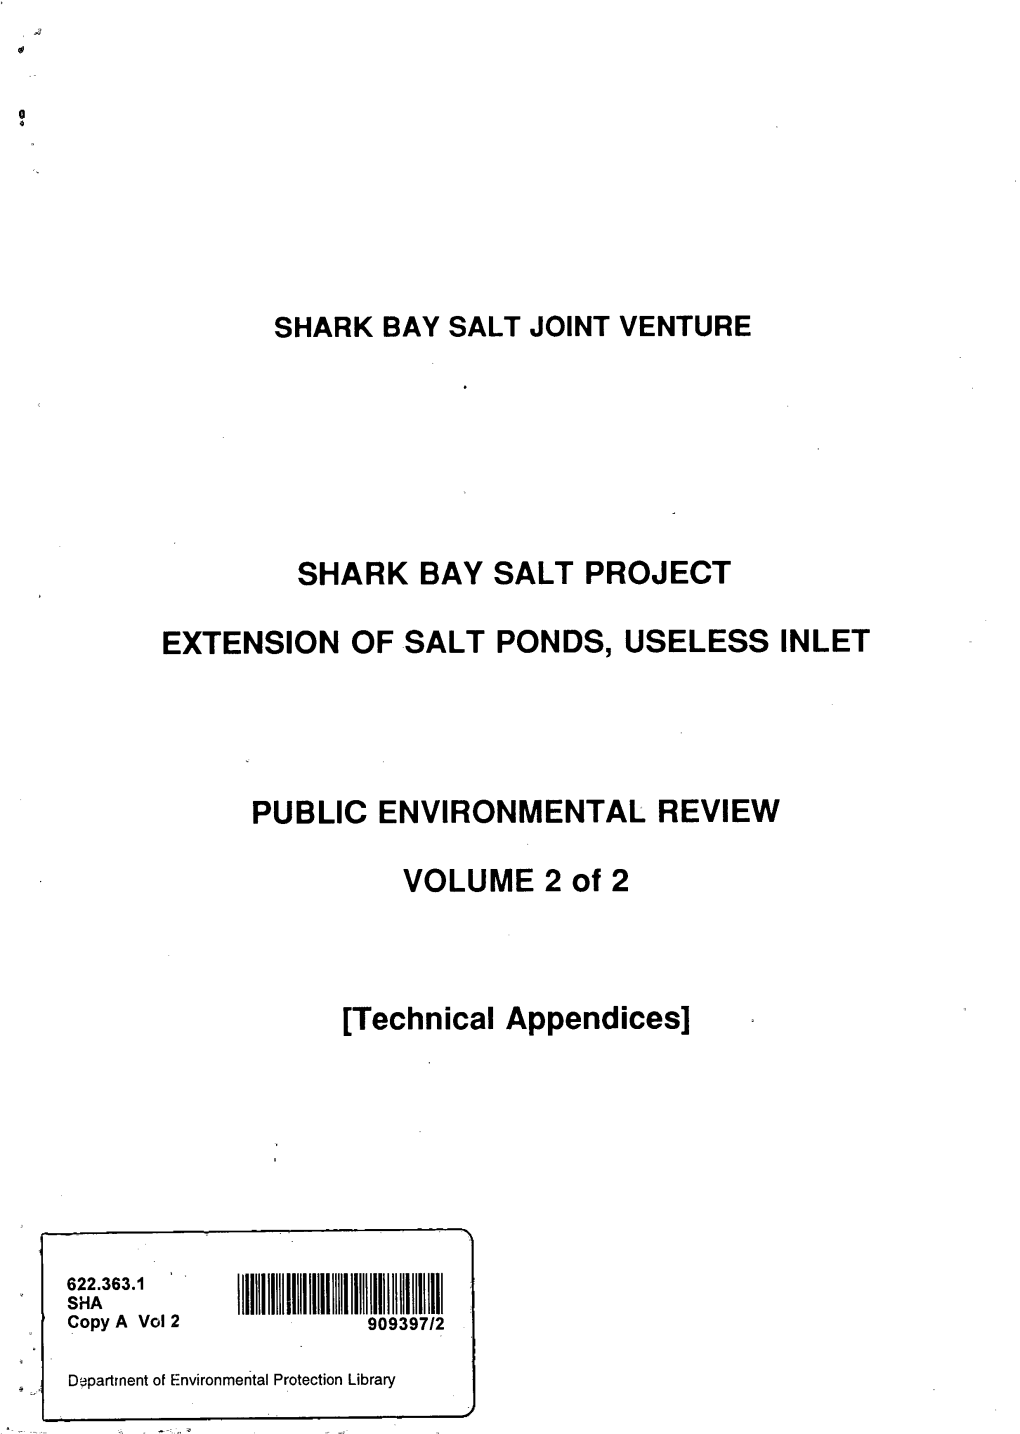 Shark Bay Salt Project Extension of Salt Ponds, Useless Inlet